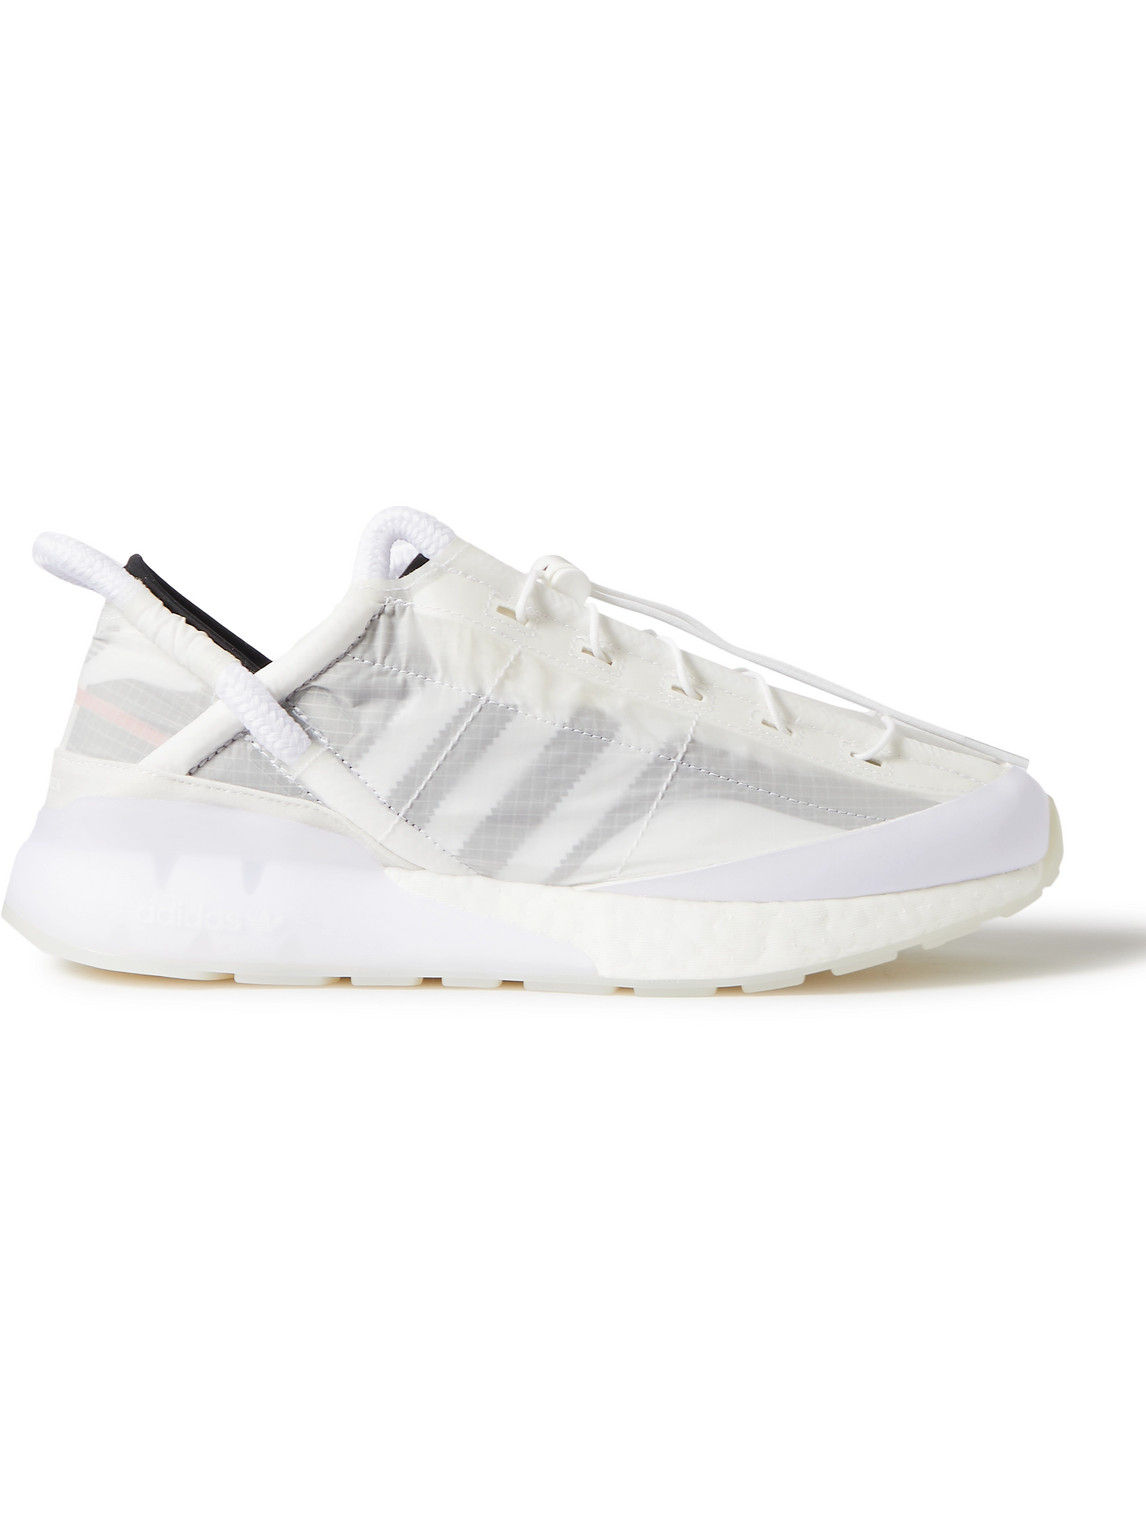 Adidas Consortium Craig Green Phomar I Ripstop Sneakers In White